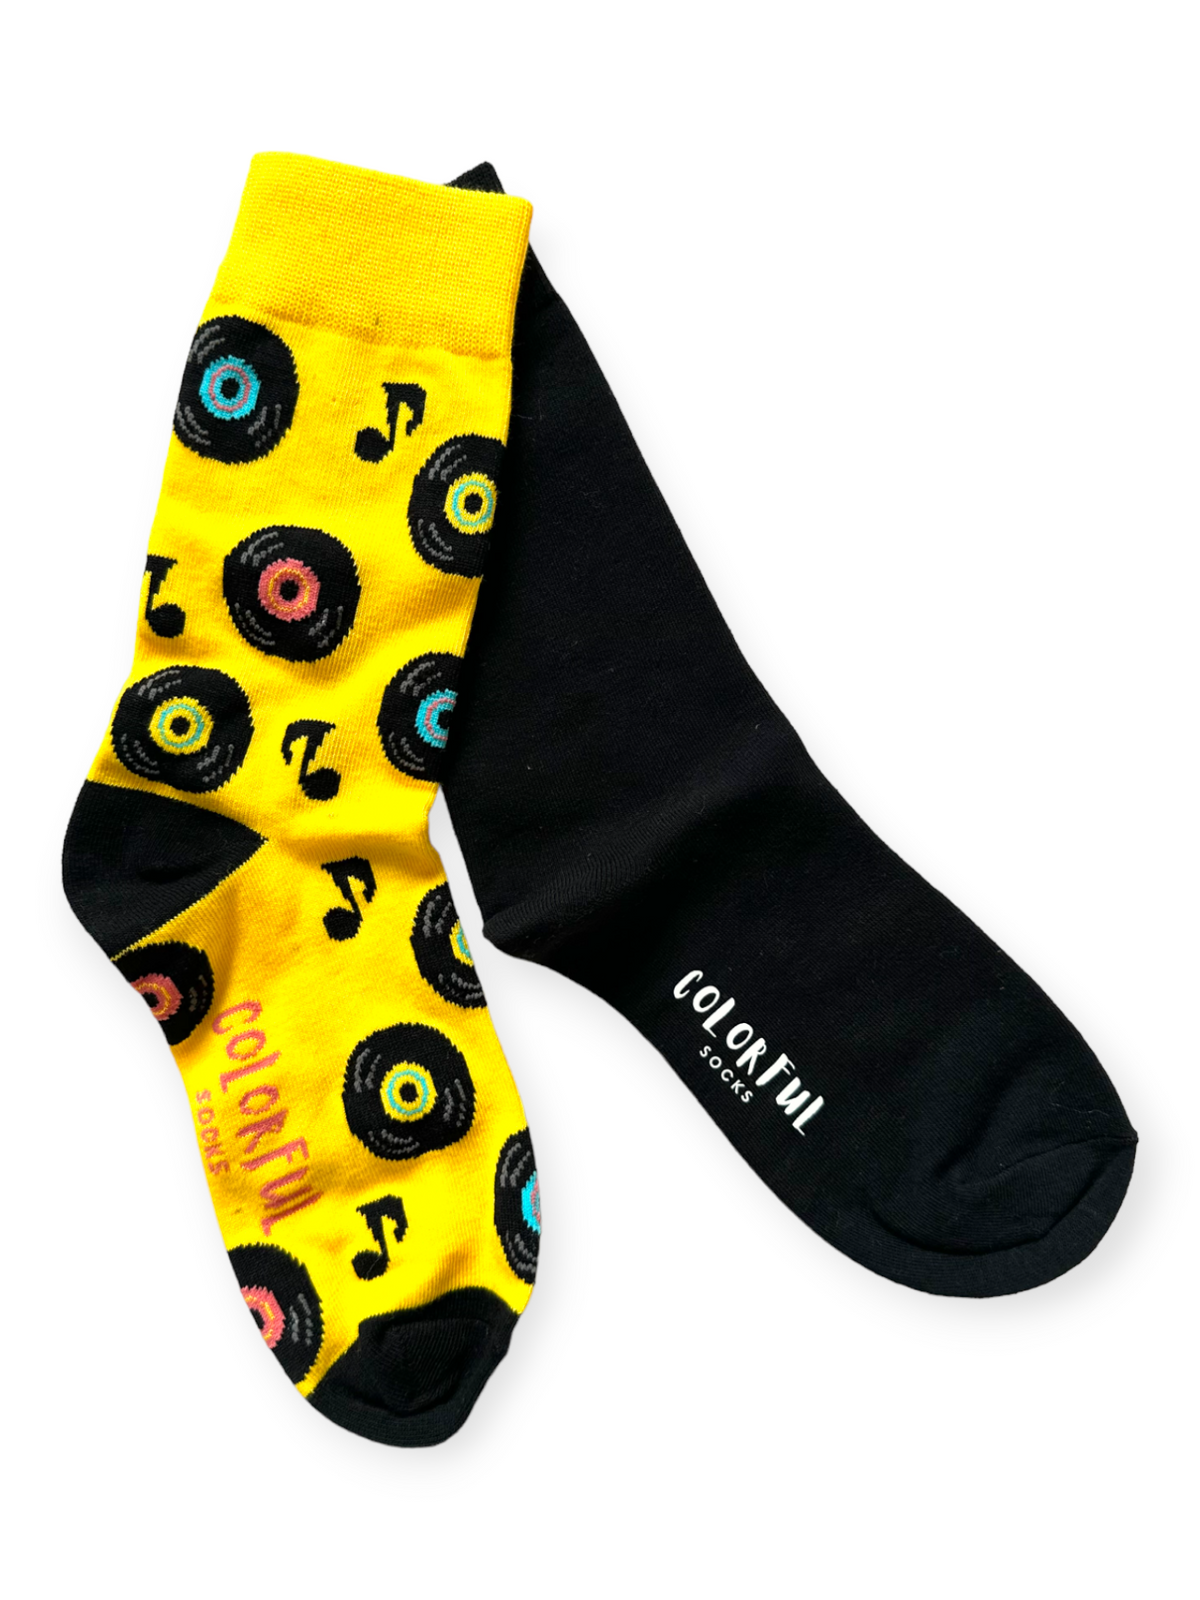 Best Colorful Socks 